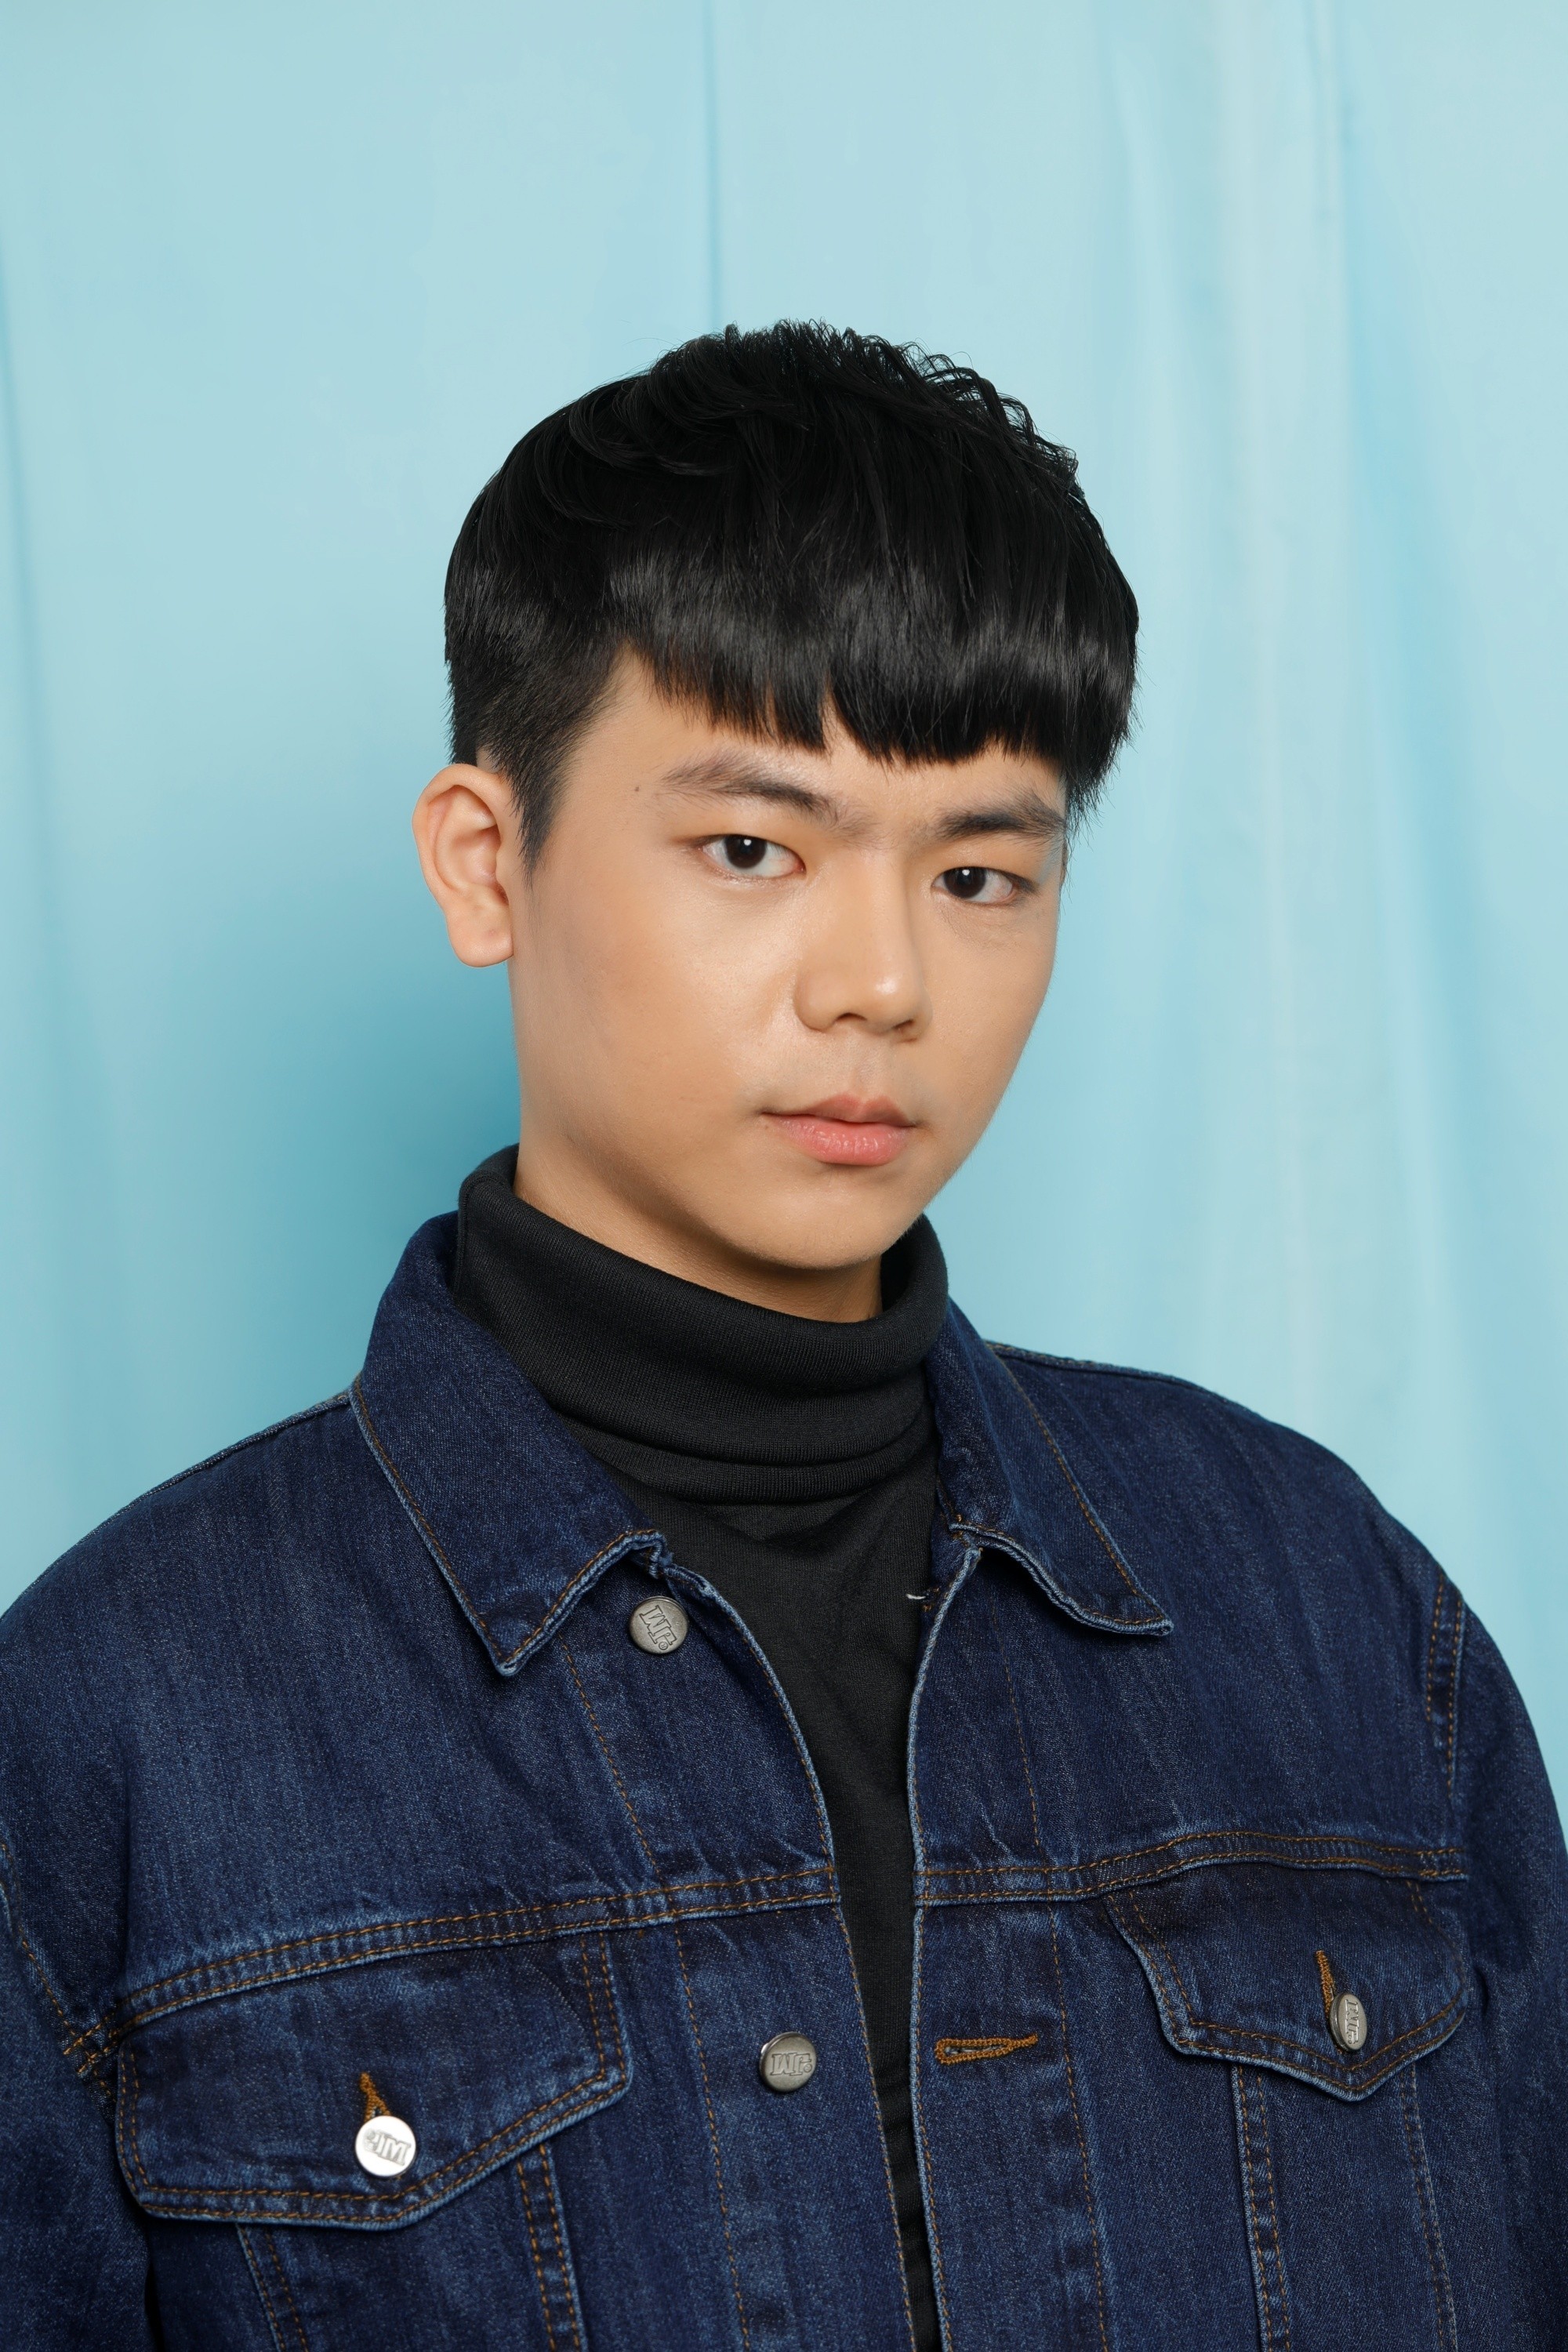 Asian man with a two-block haircut wearing a dark shirt and denim jacket